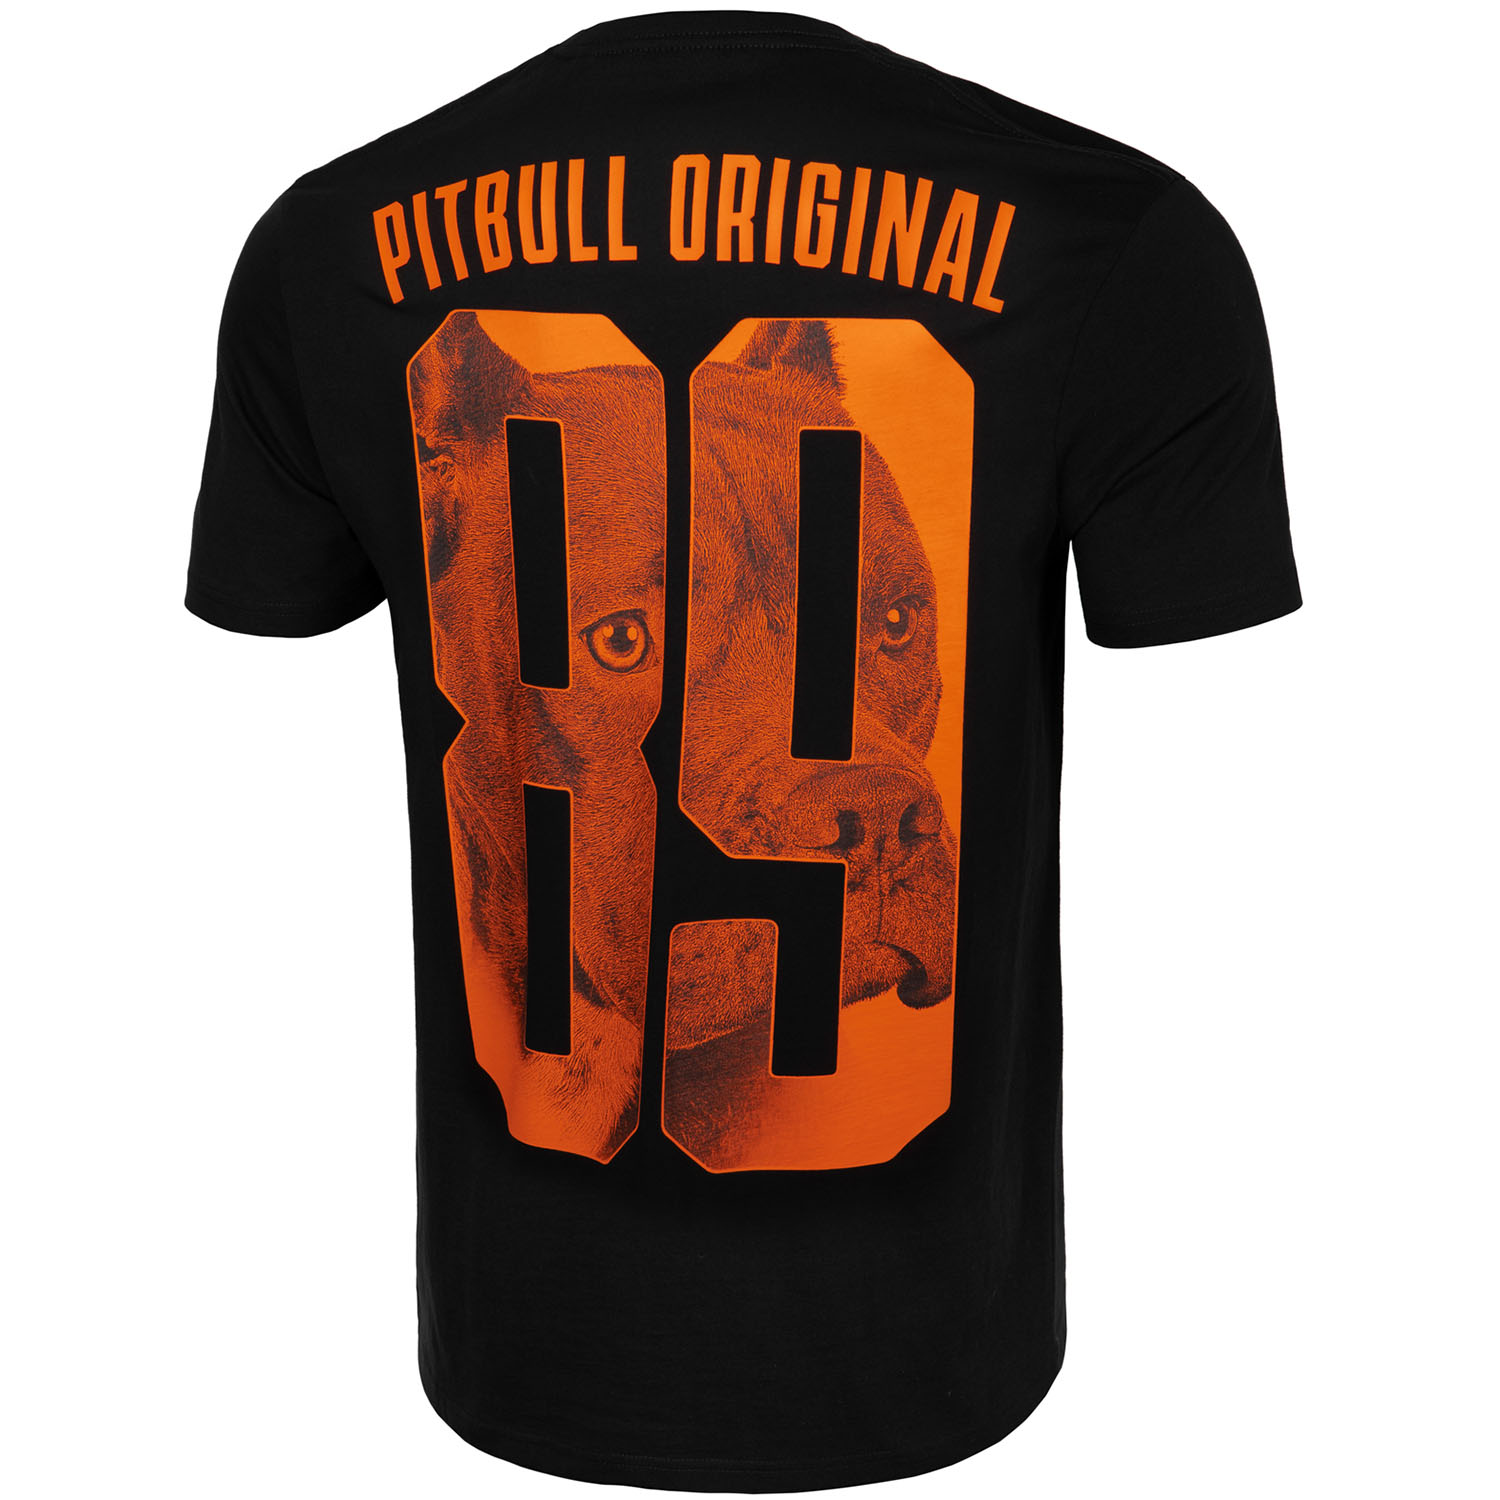 Pit Bull West Coast T-Shirt, Eighty Nine, Dog, black